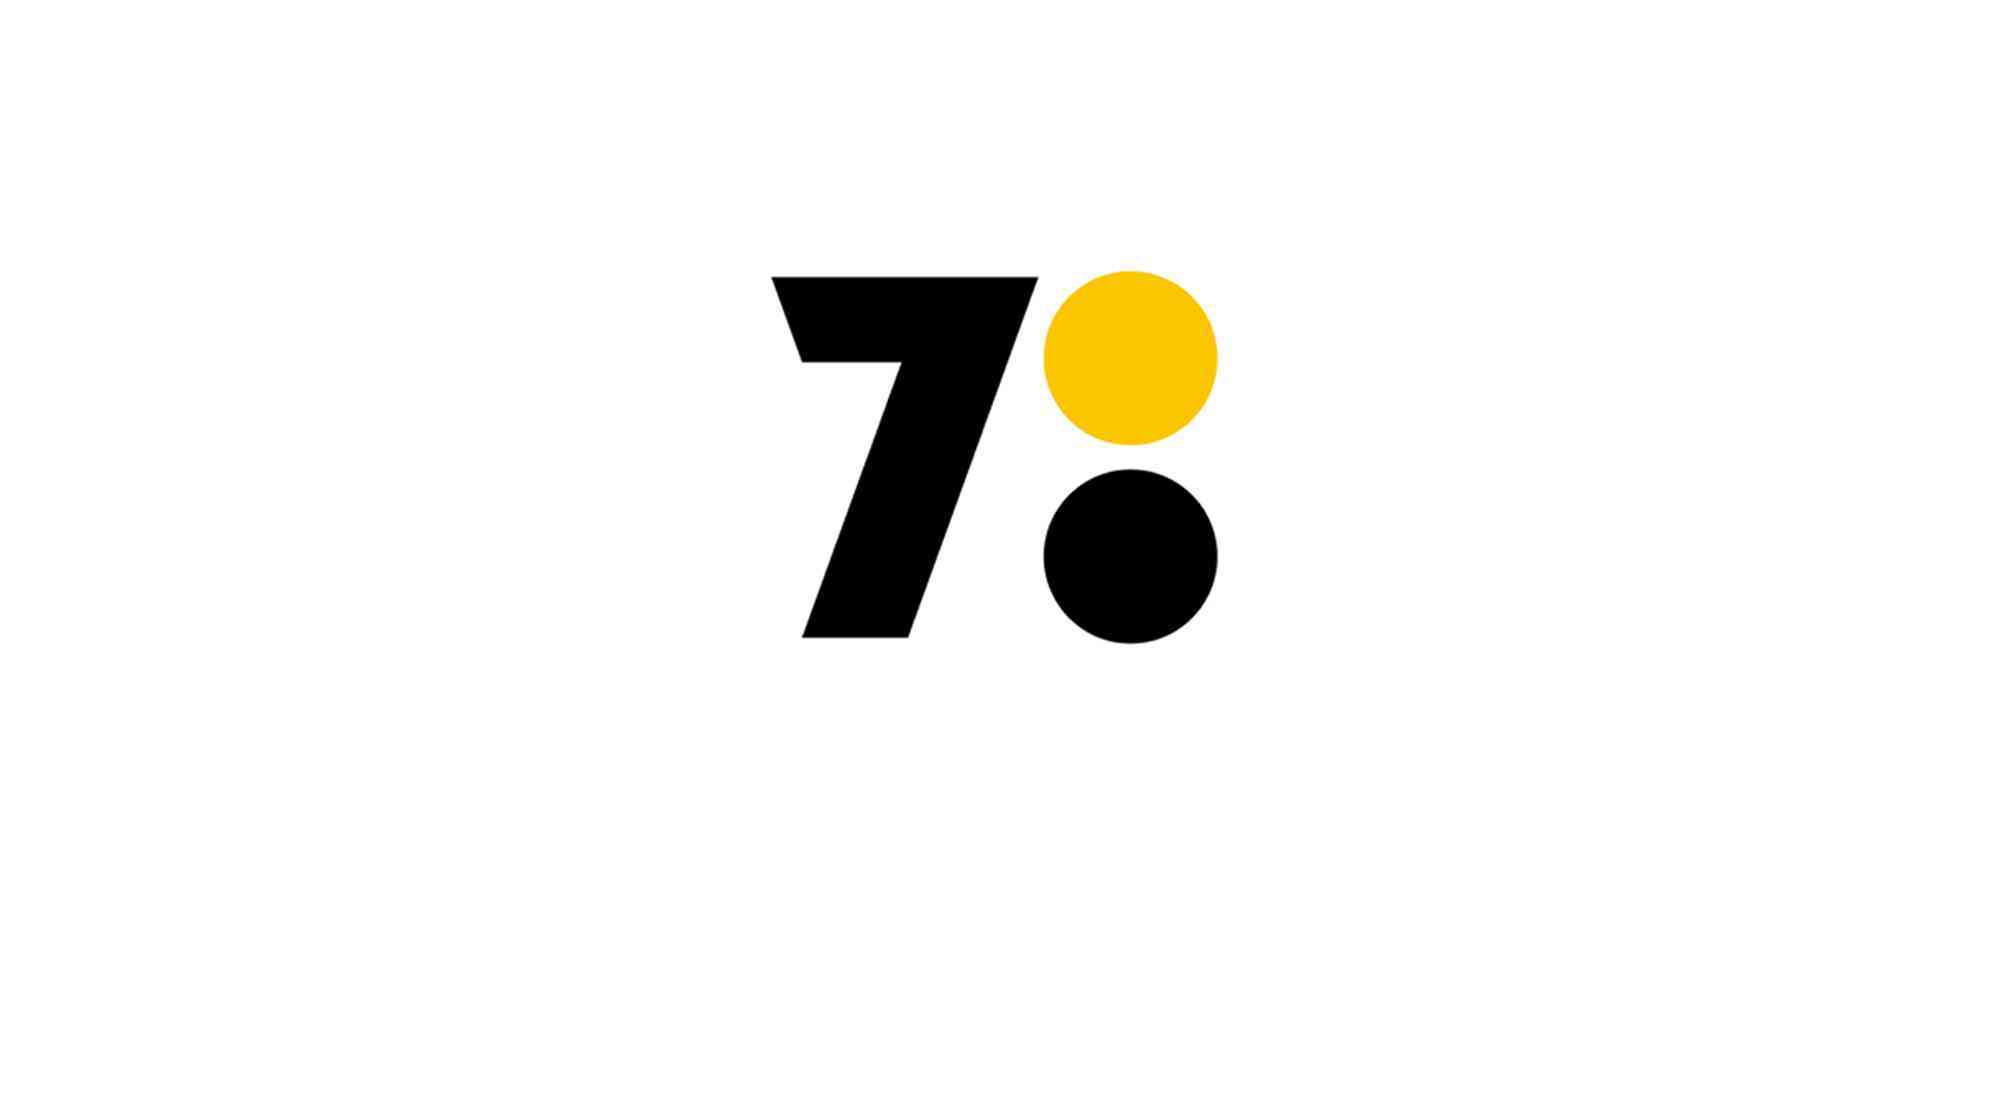 700bike网站logo设计图片素材